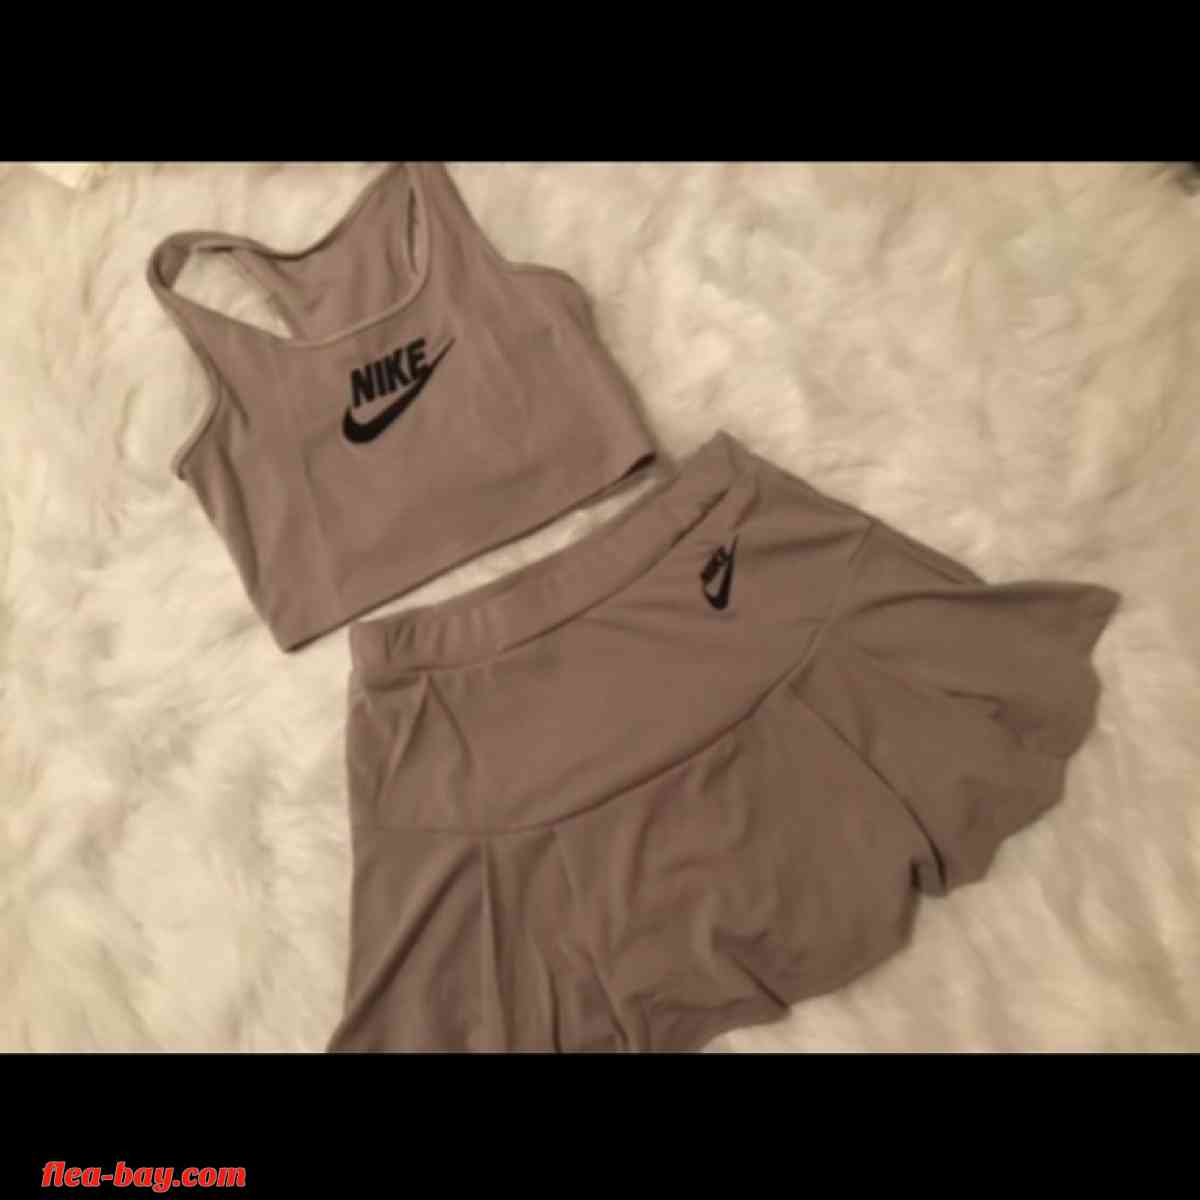 Nike outfits